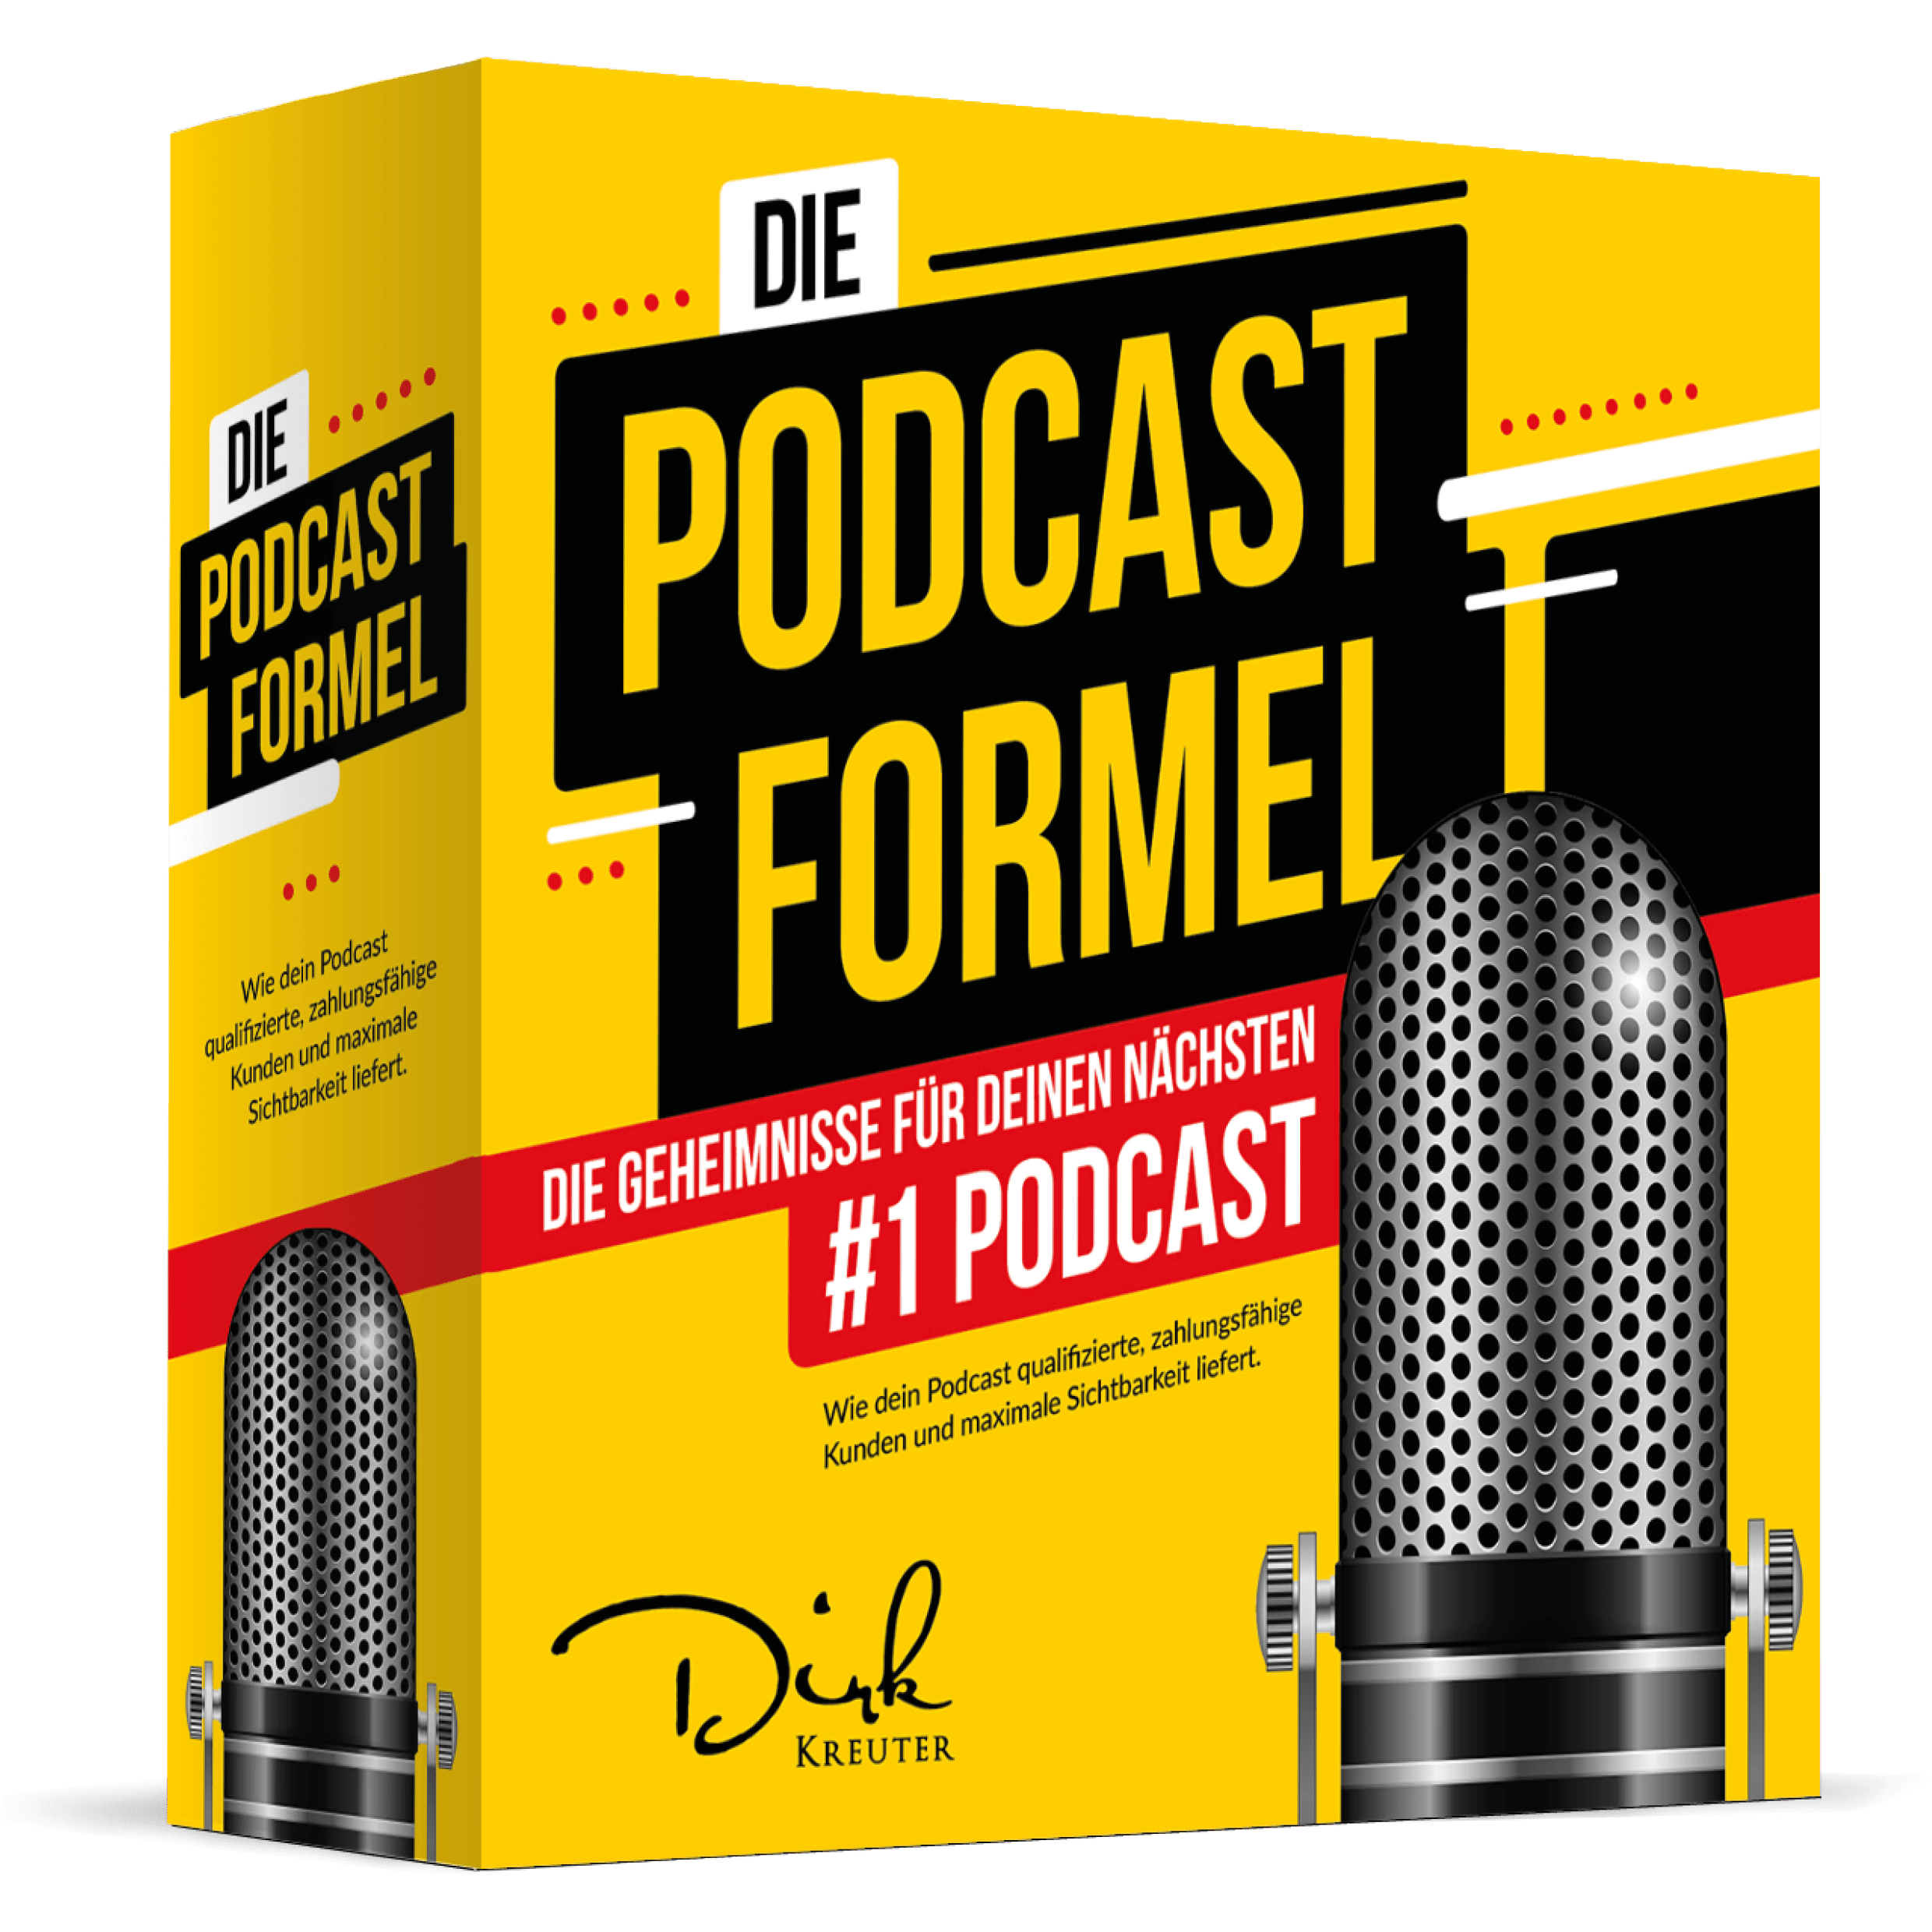 Die Podcast-Formel